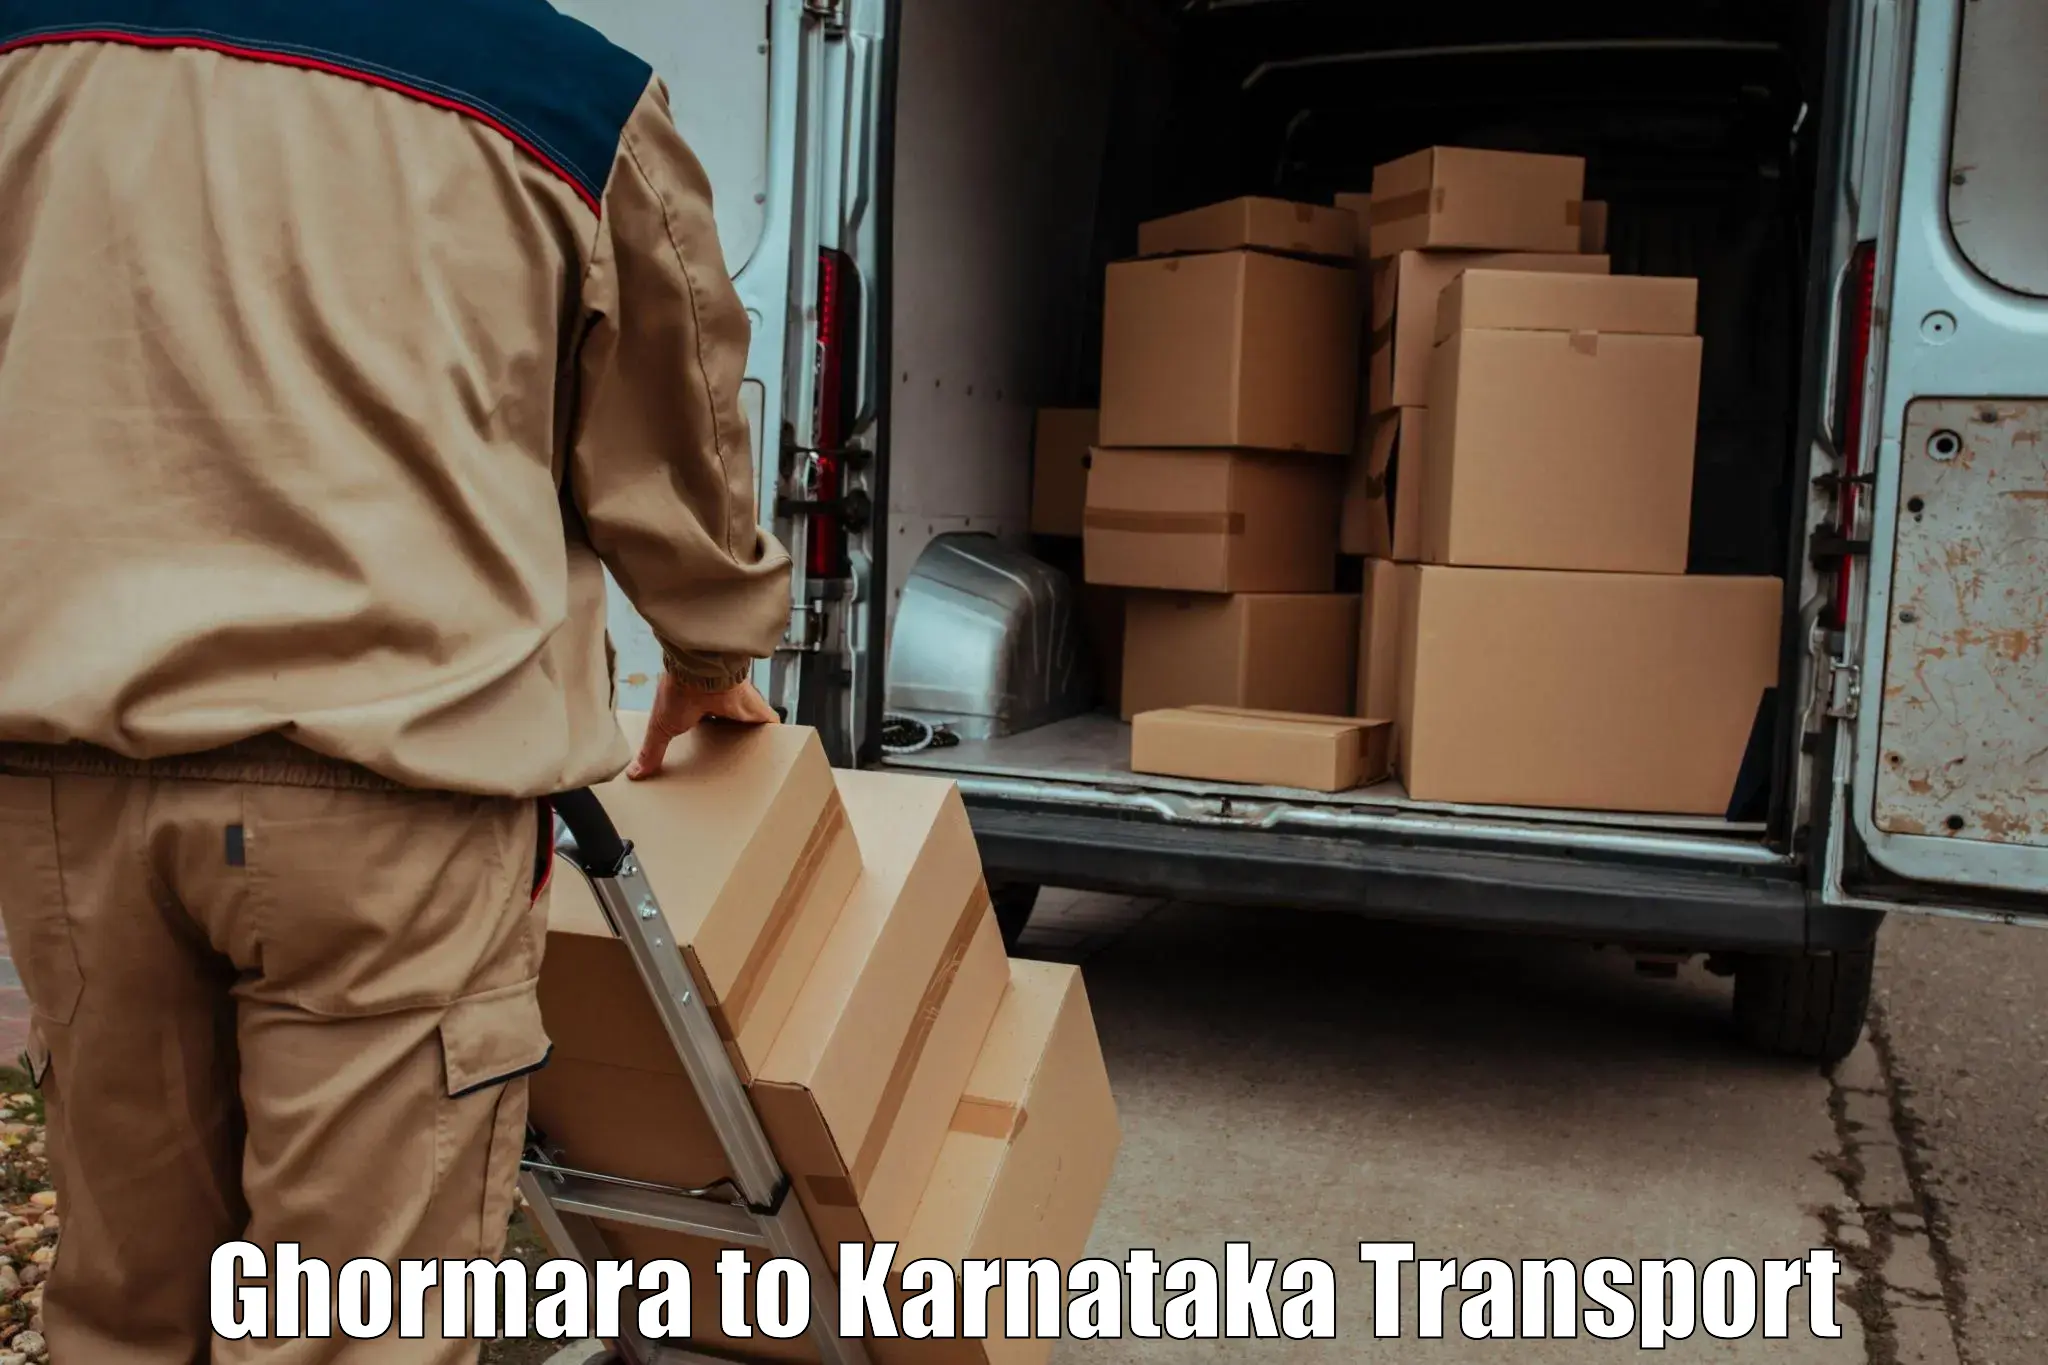 Container transport service Ghormara to Karnataka